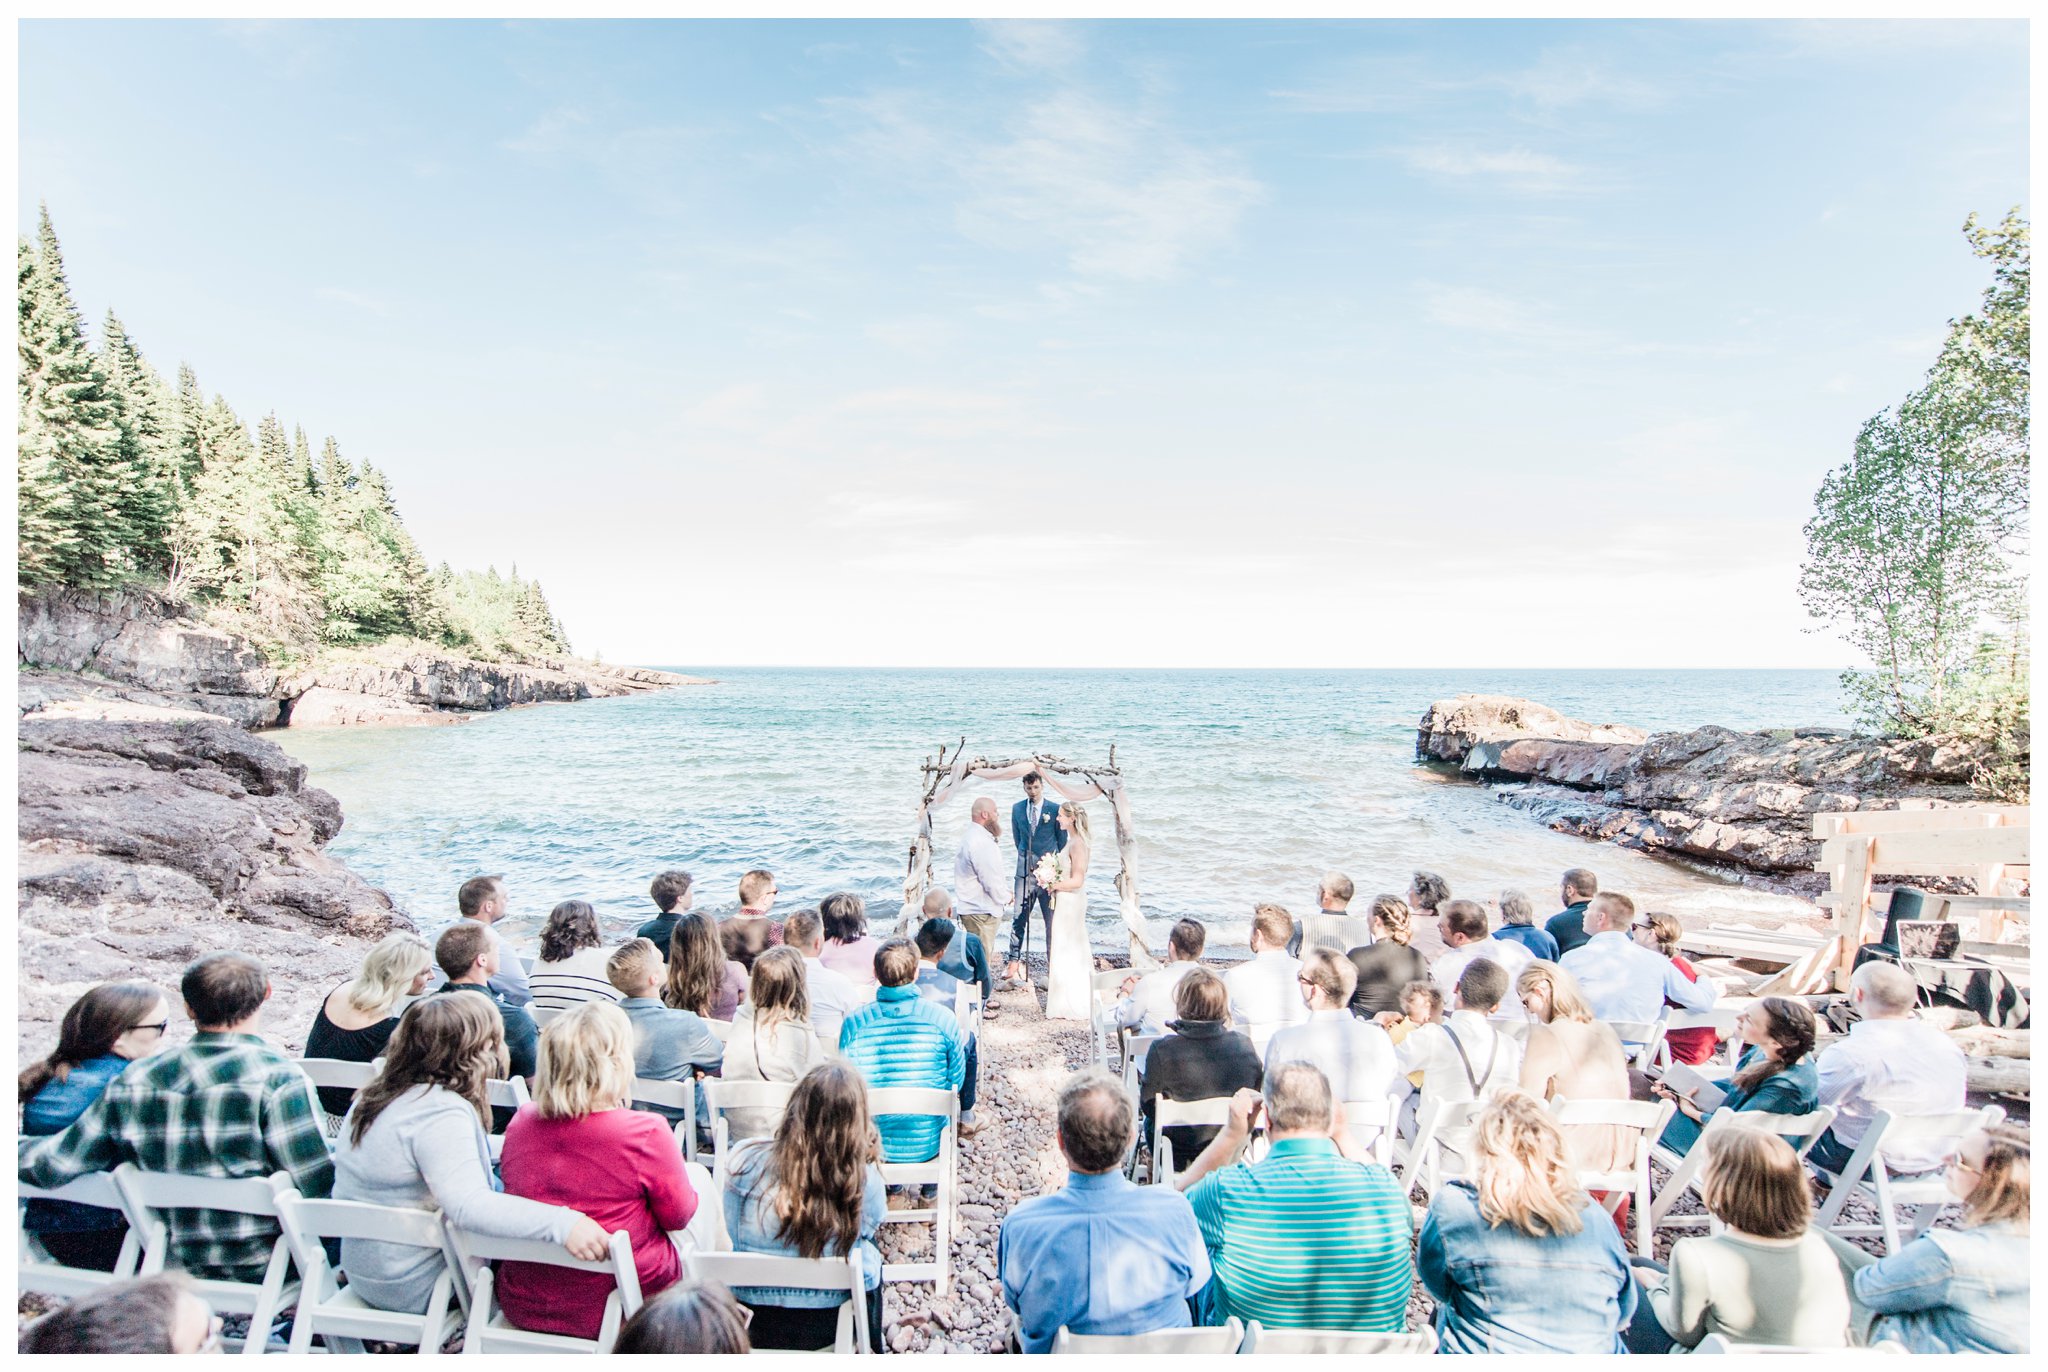 Wedding ceremony at Bluefin Bay. Photo by Kayla Lee.